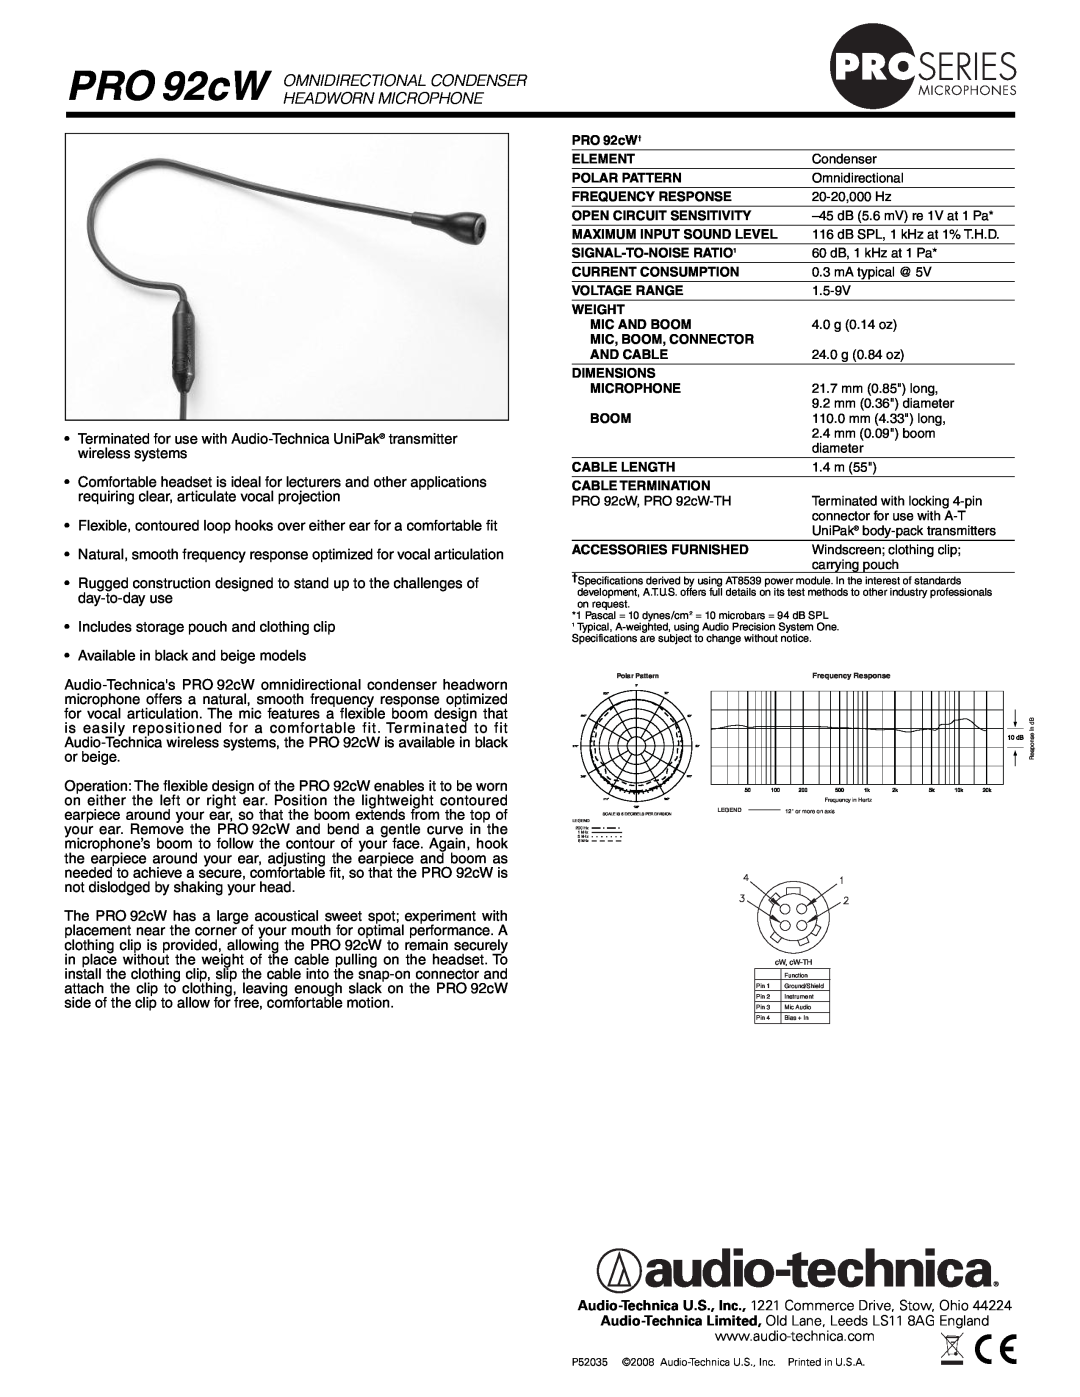 Audio-Technica Pro 92cW dimensions PRO 92cW OMNIDIRECTIONAL CONDENSER HEADWORN MICROPHONE 